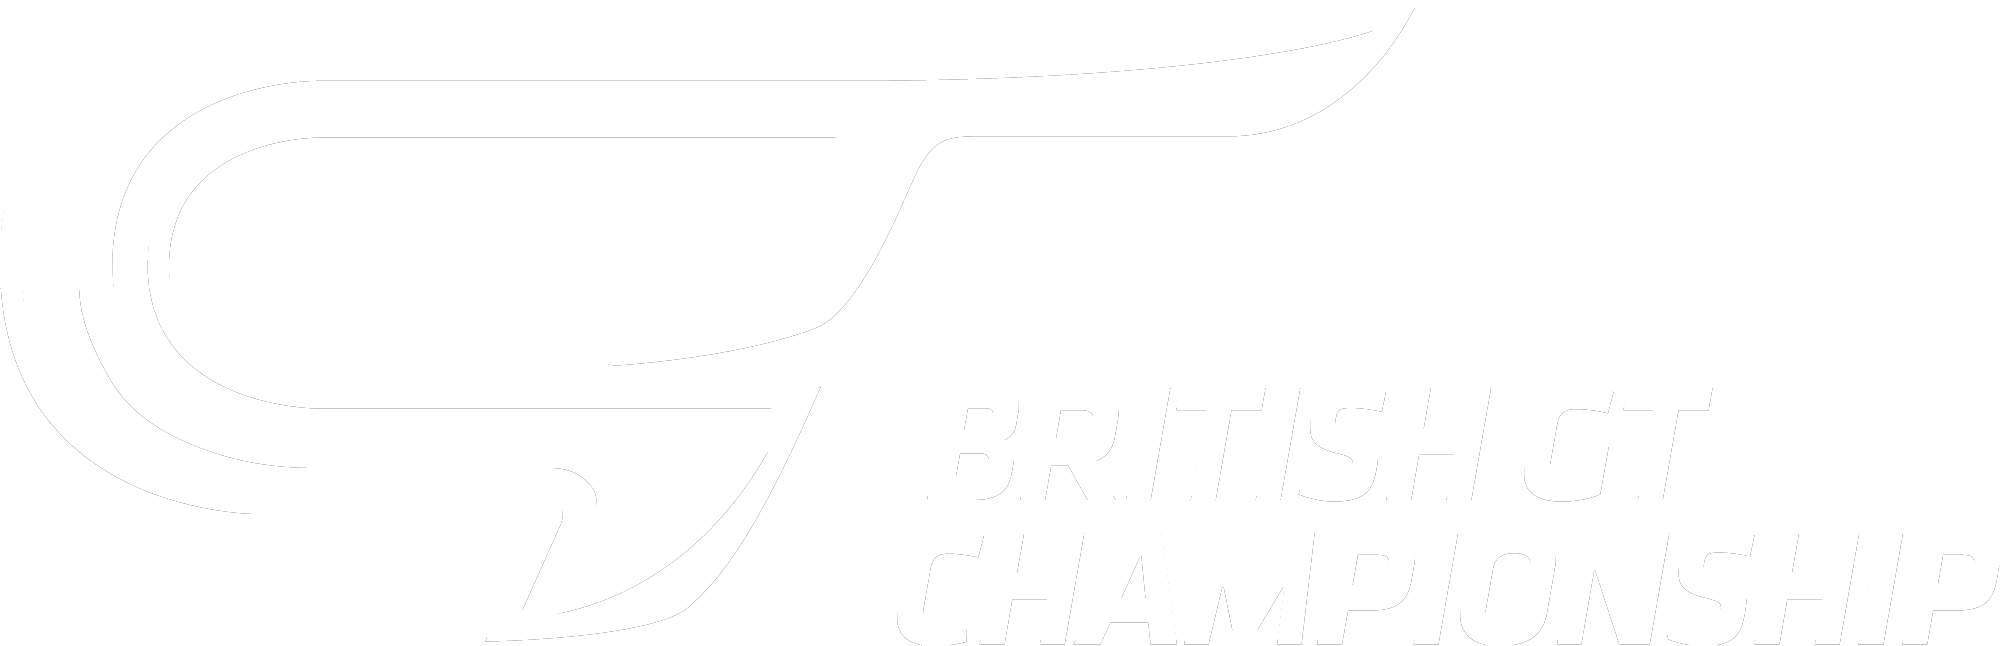 British GT Championship